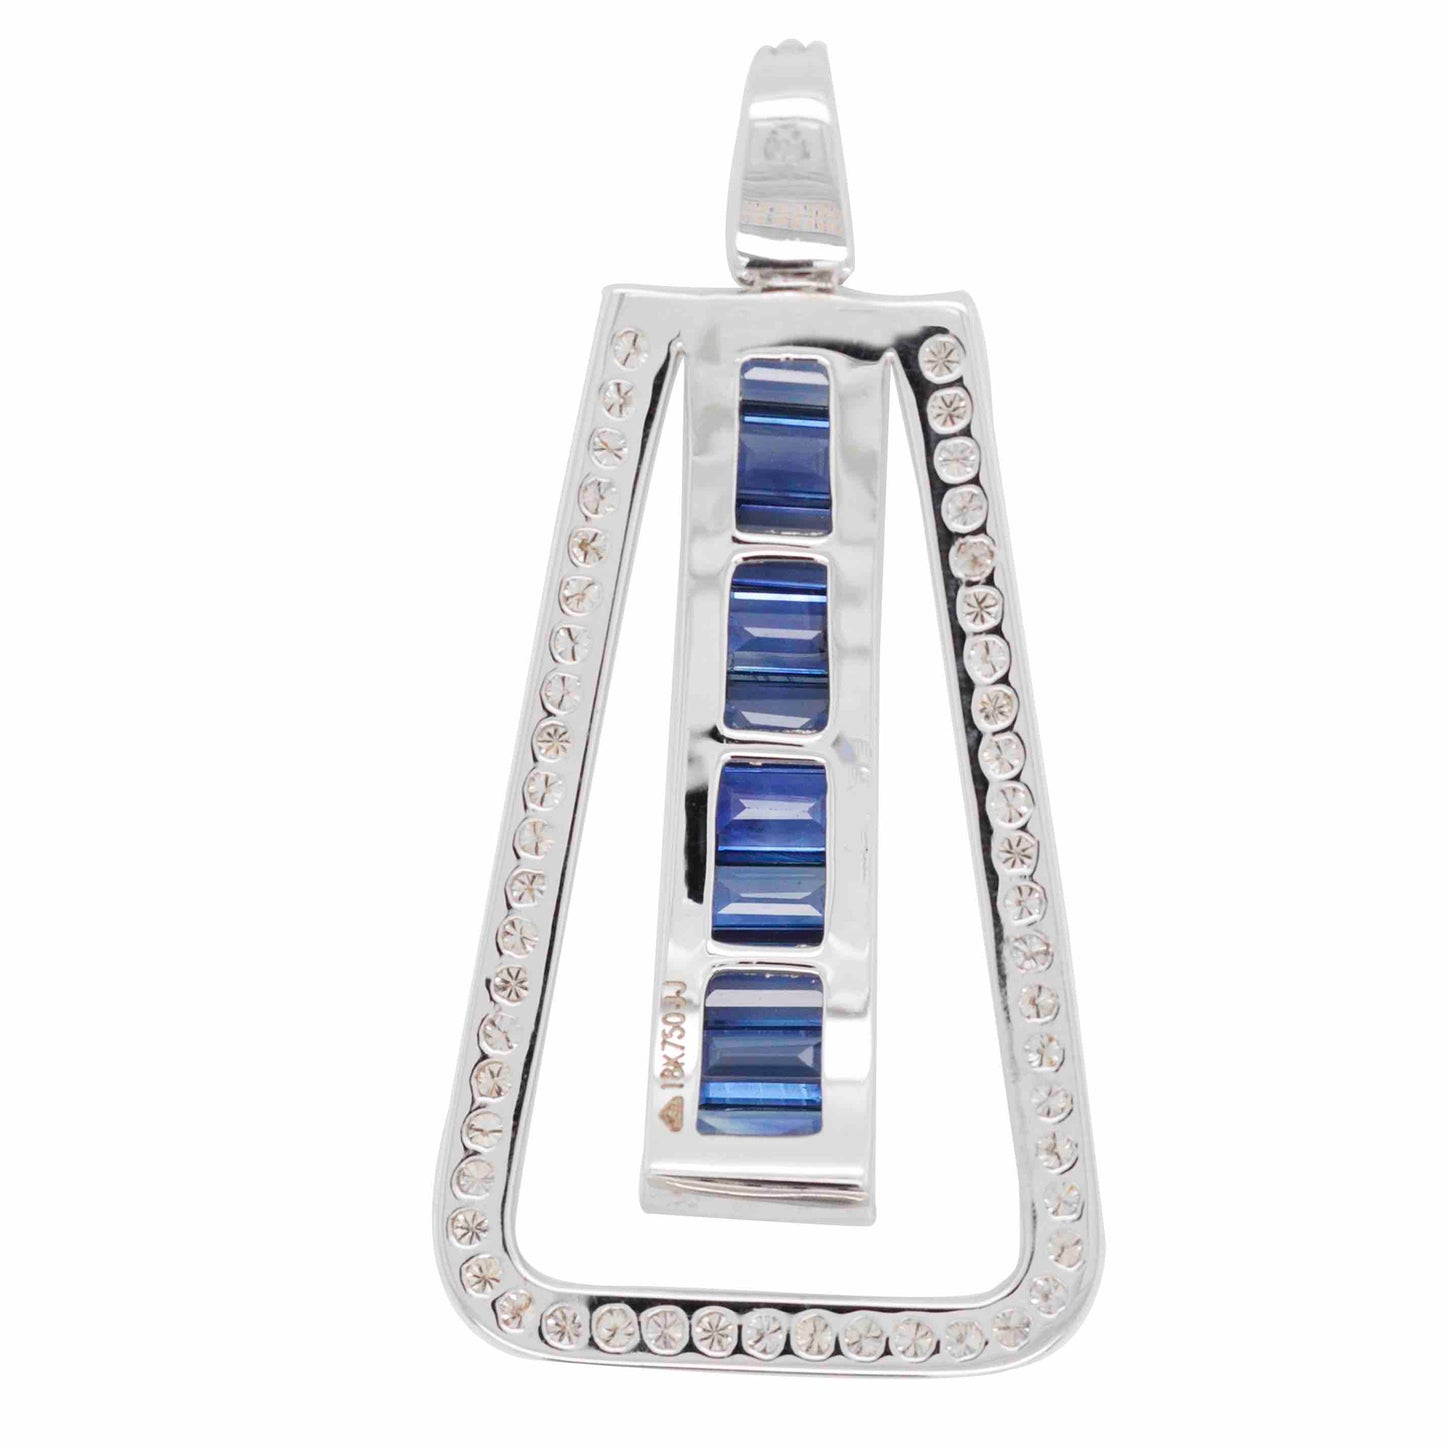 18K Gold Art Deco Channel-Set Blue Sapphire Diamond Pendant Necklace - Vaibhav Dhadda Jewelry